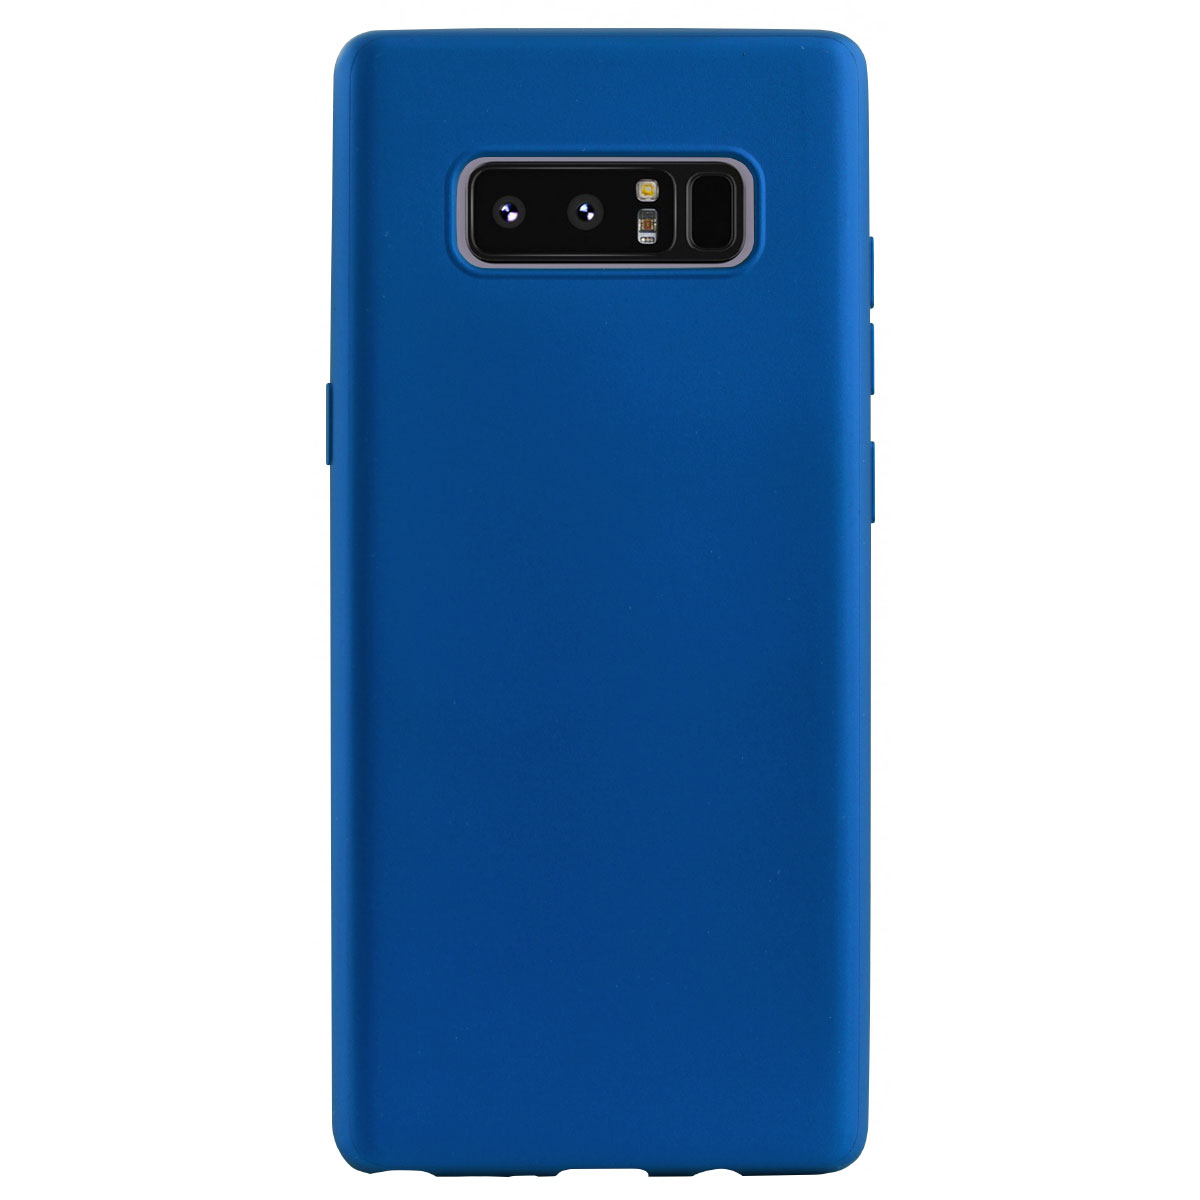 Husa Samsung Galaxy Note 8 Hoco Phantom Albastru thumb